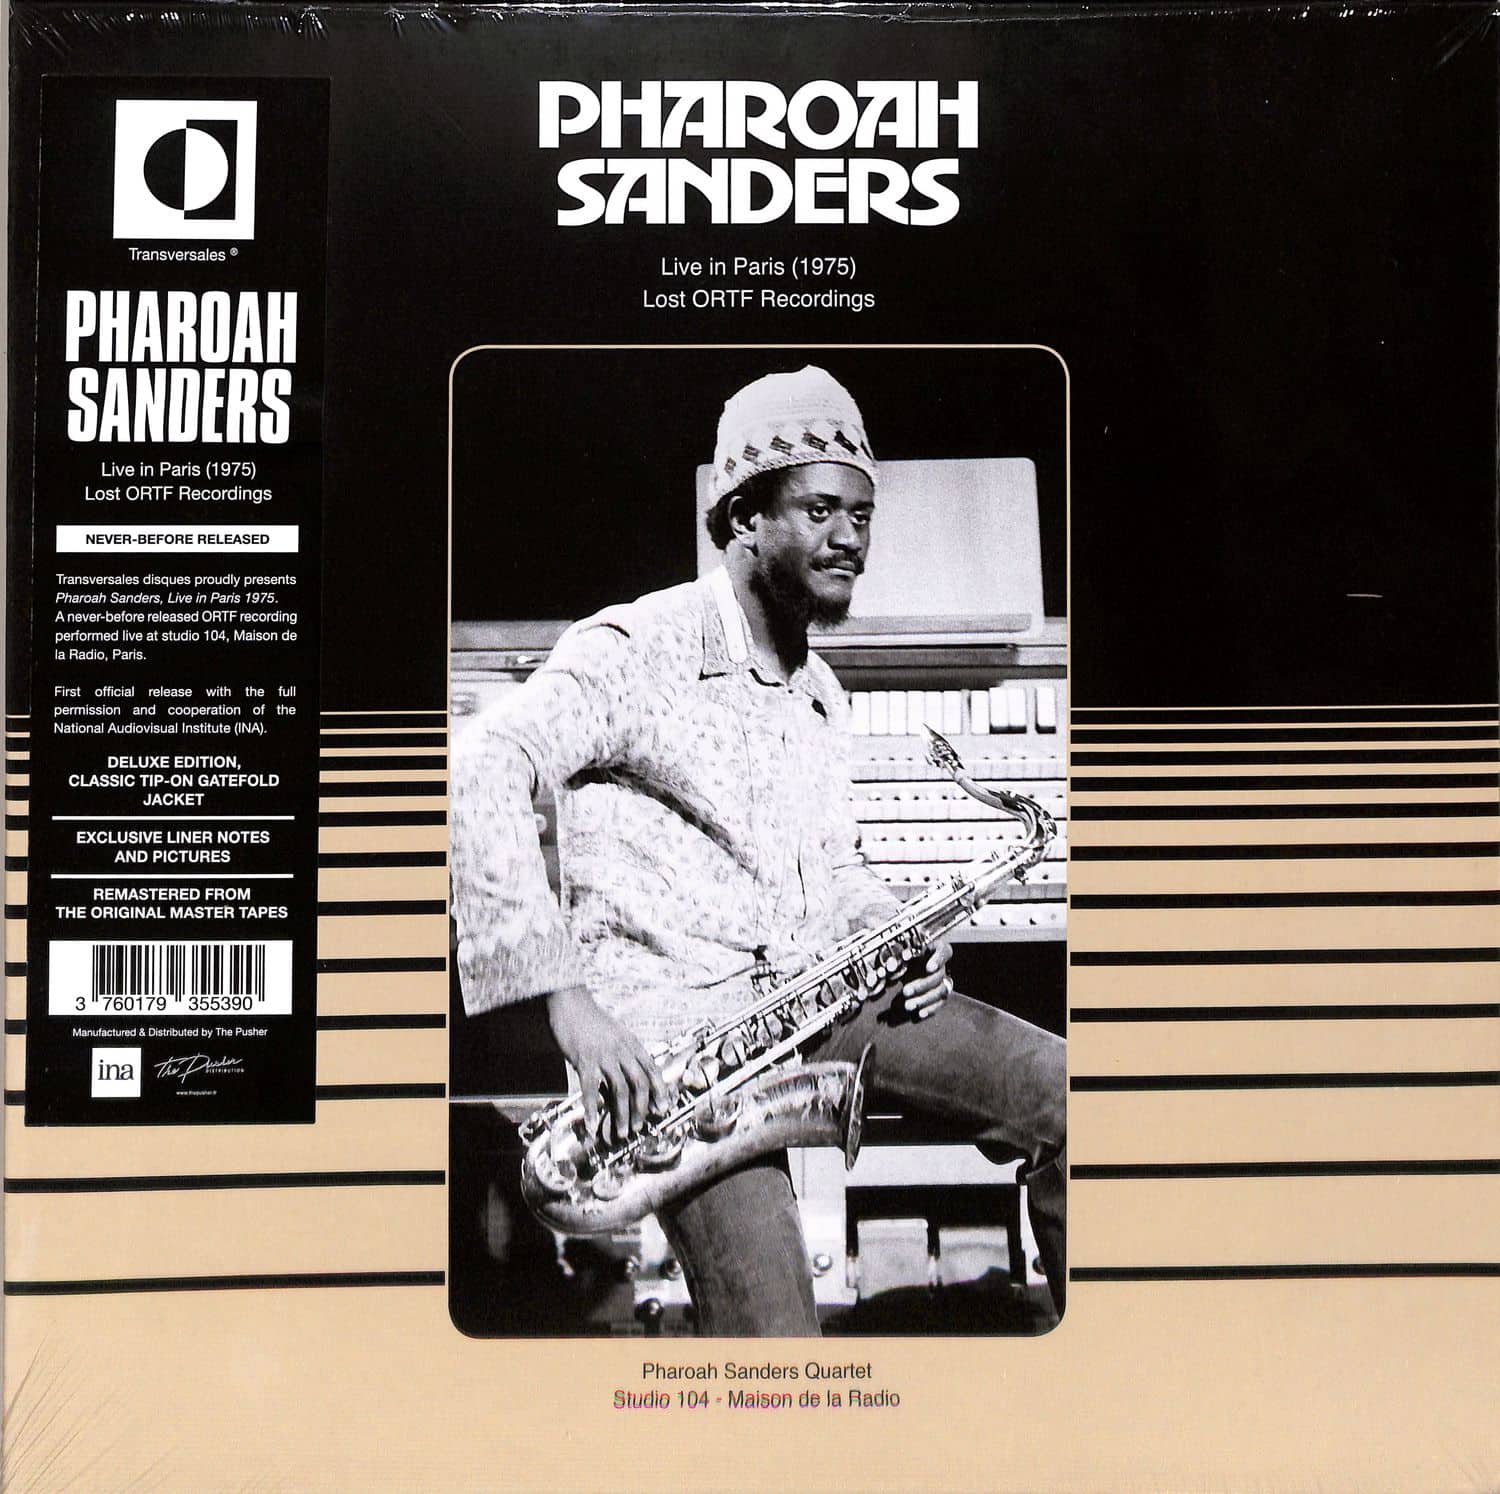 Pharoah Sanders - LIVE IN PARIS 1975 - LOST ORTF RECORDINGS 